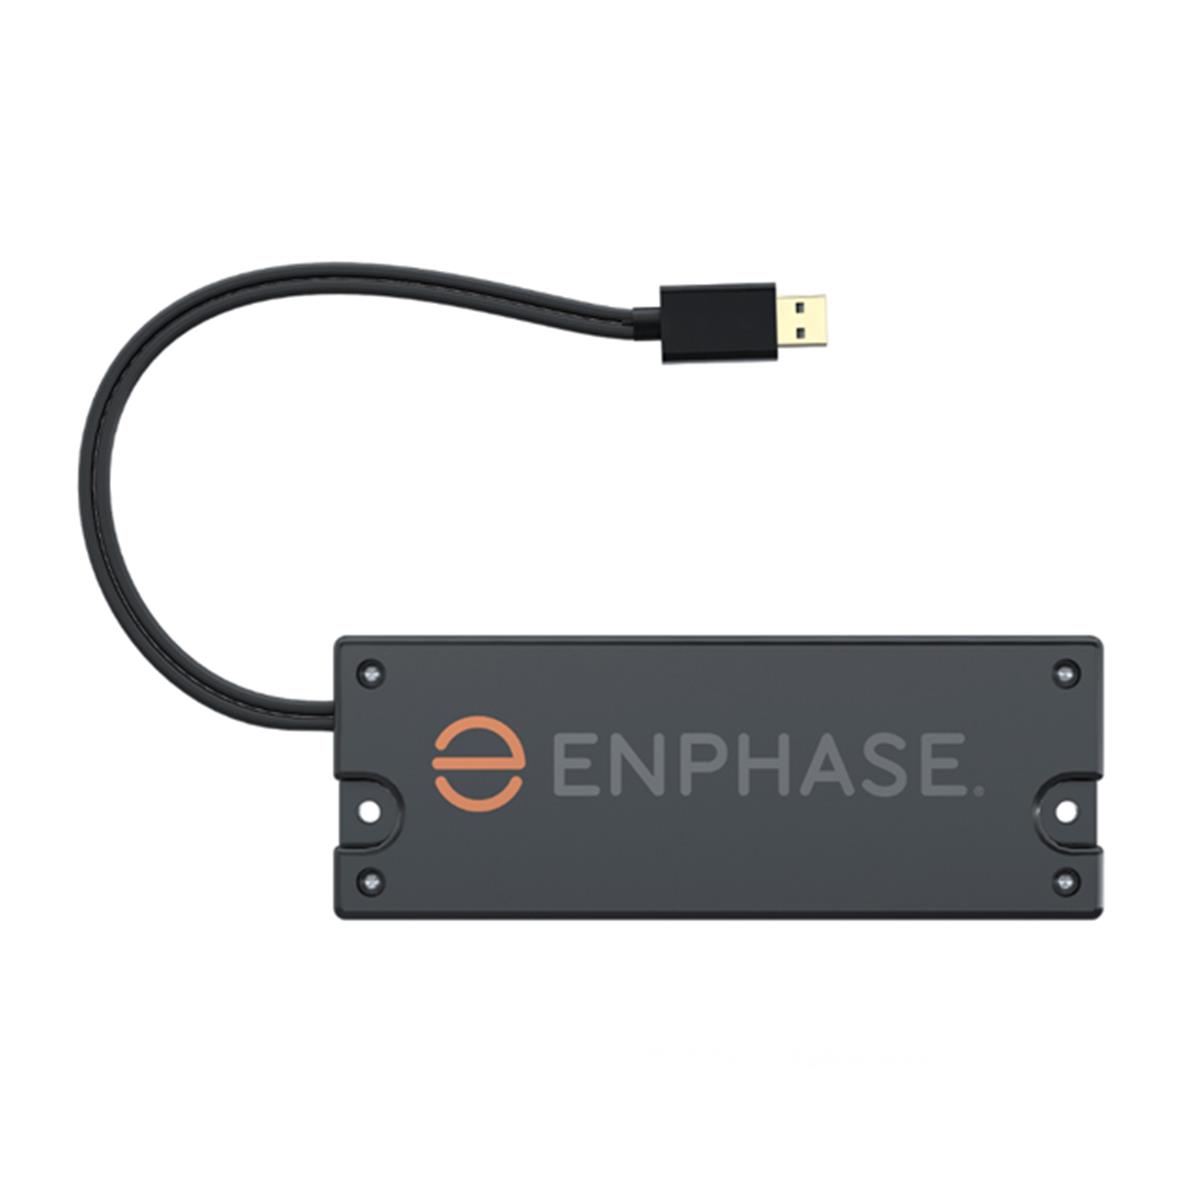 Enphase Wireless Communication Adapter